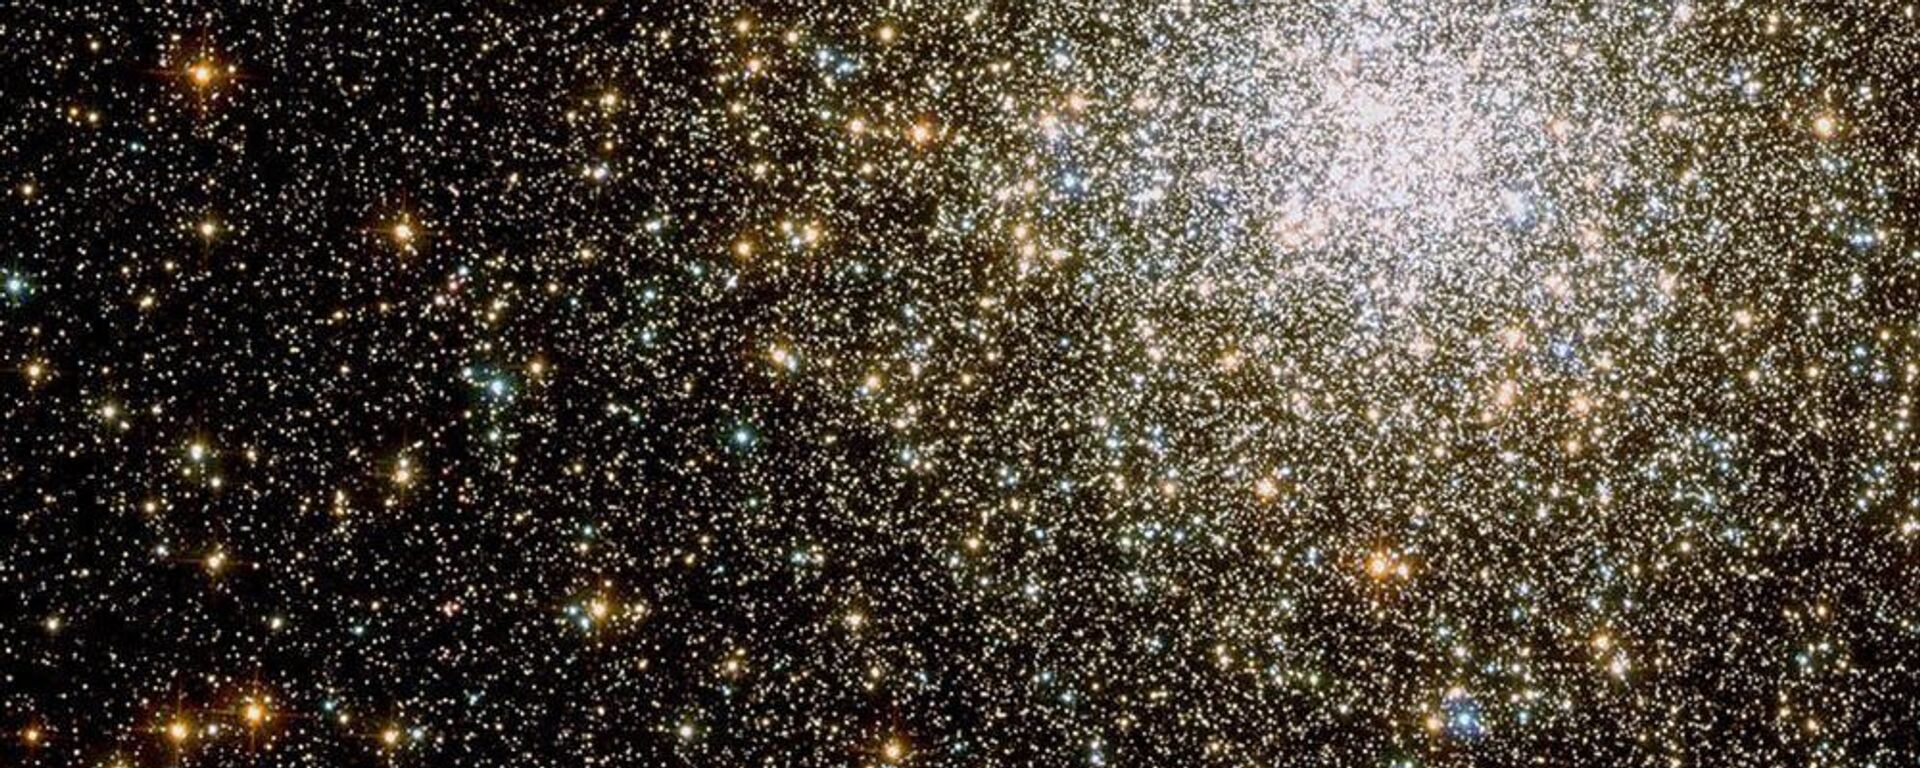 M62 - مجموعة نجوم كروية من المجرات في كوكبة الحواء - سبوتنيك عربي, 1920, 26.03.2023